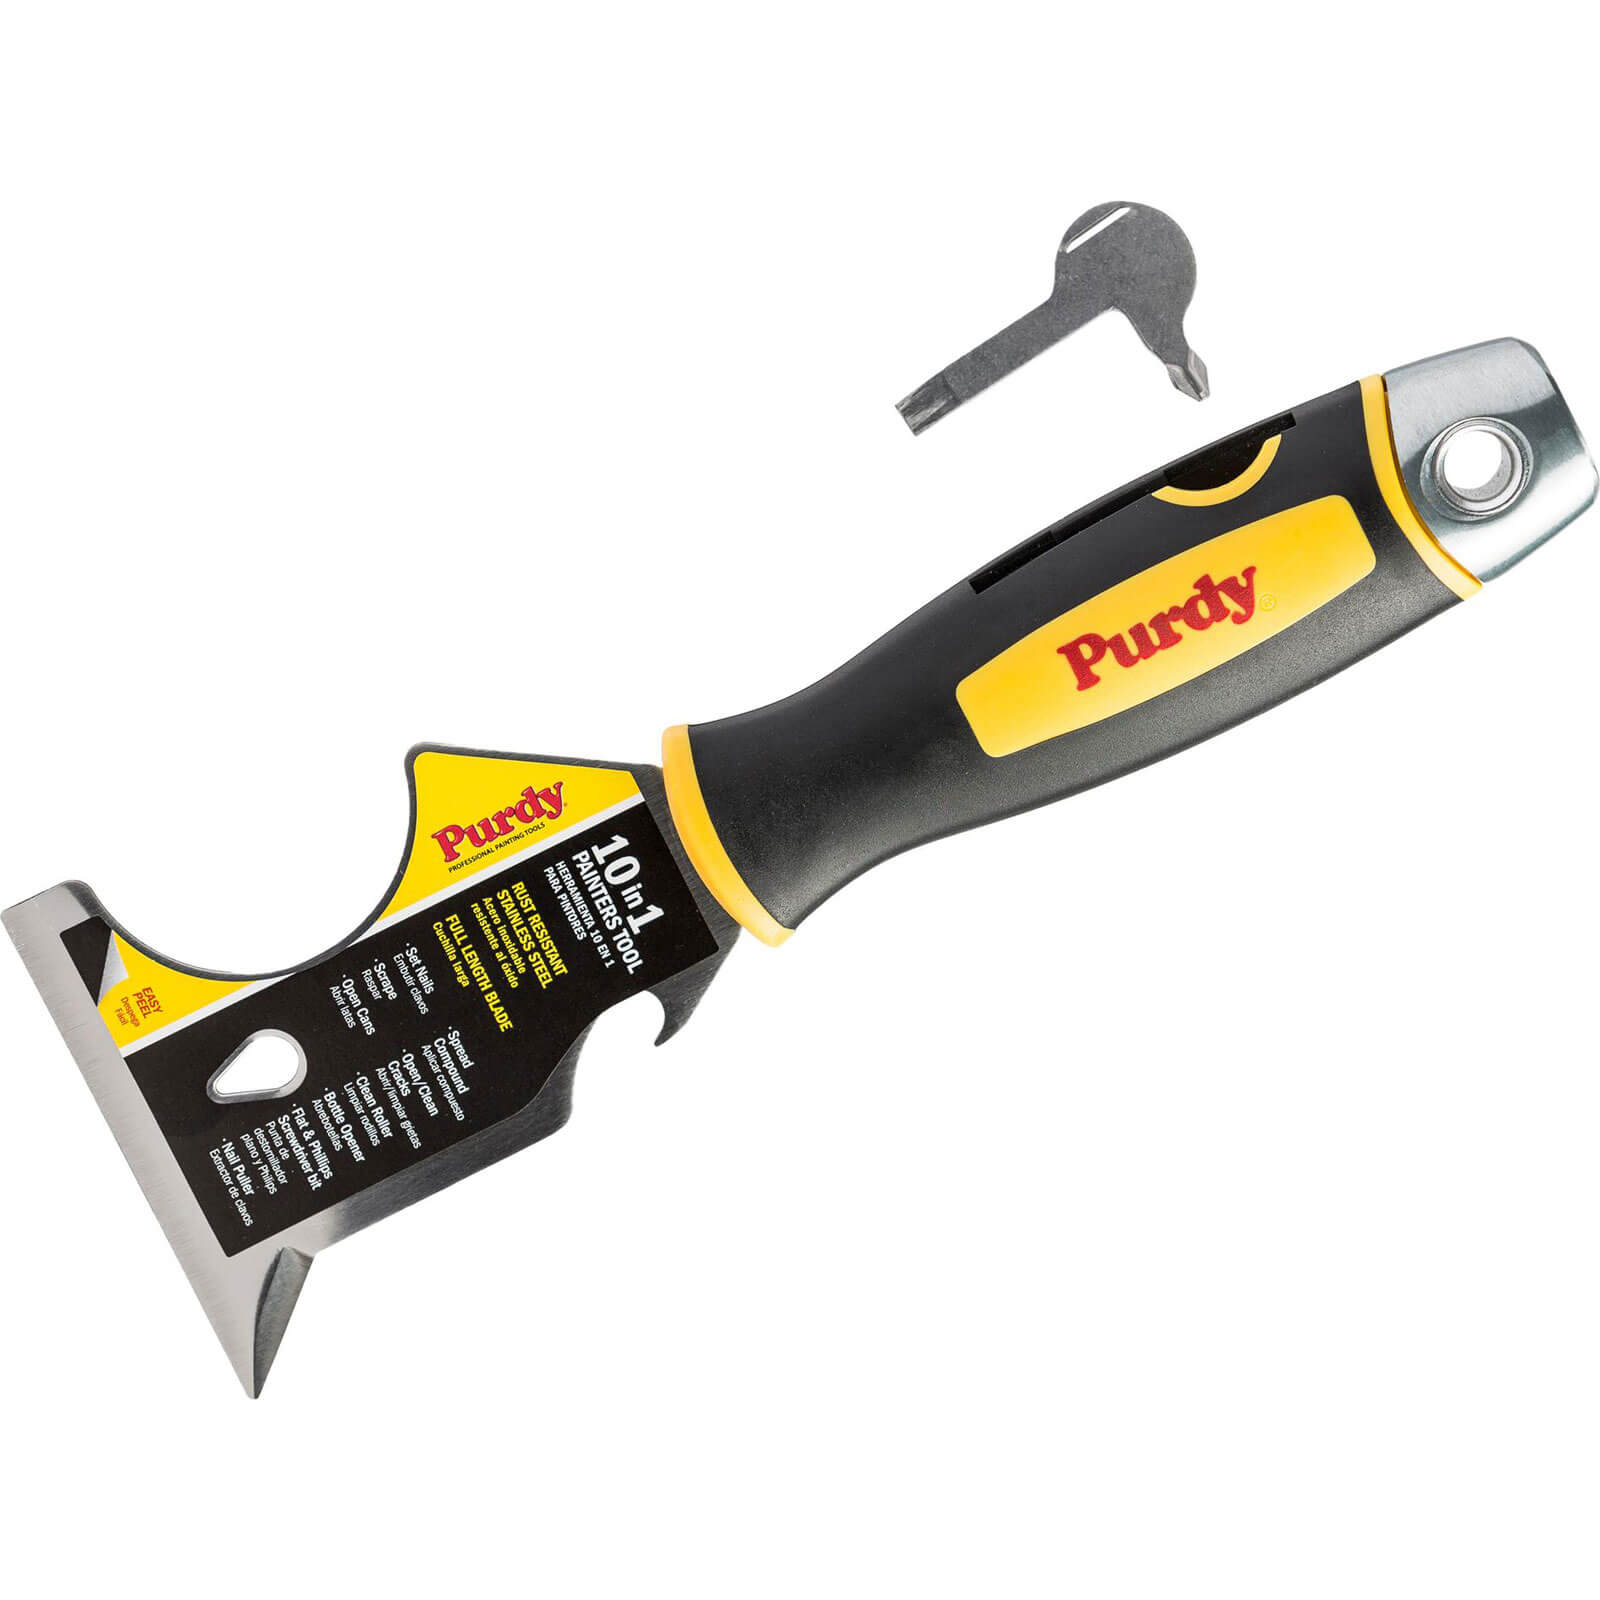 Image of Purdy Premium 10 in 1 Multi-Tool Scraper Hammer Roller Cleaner Nail Puller